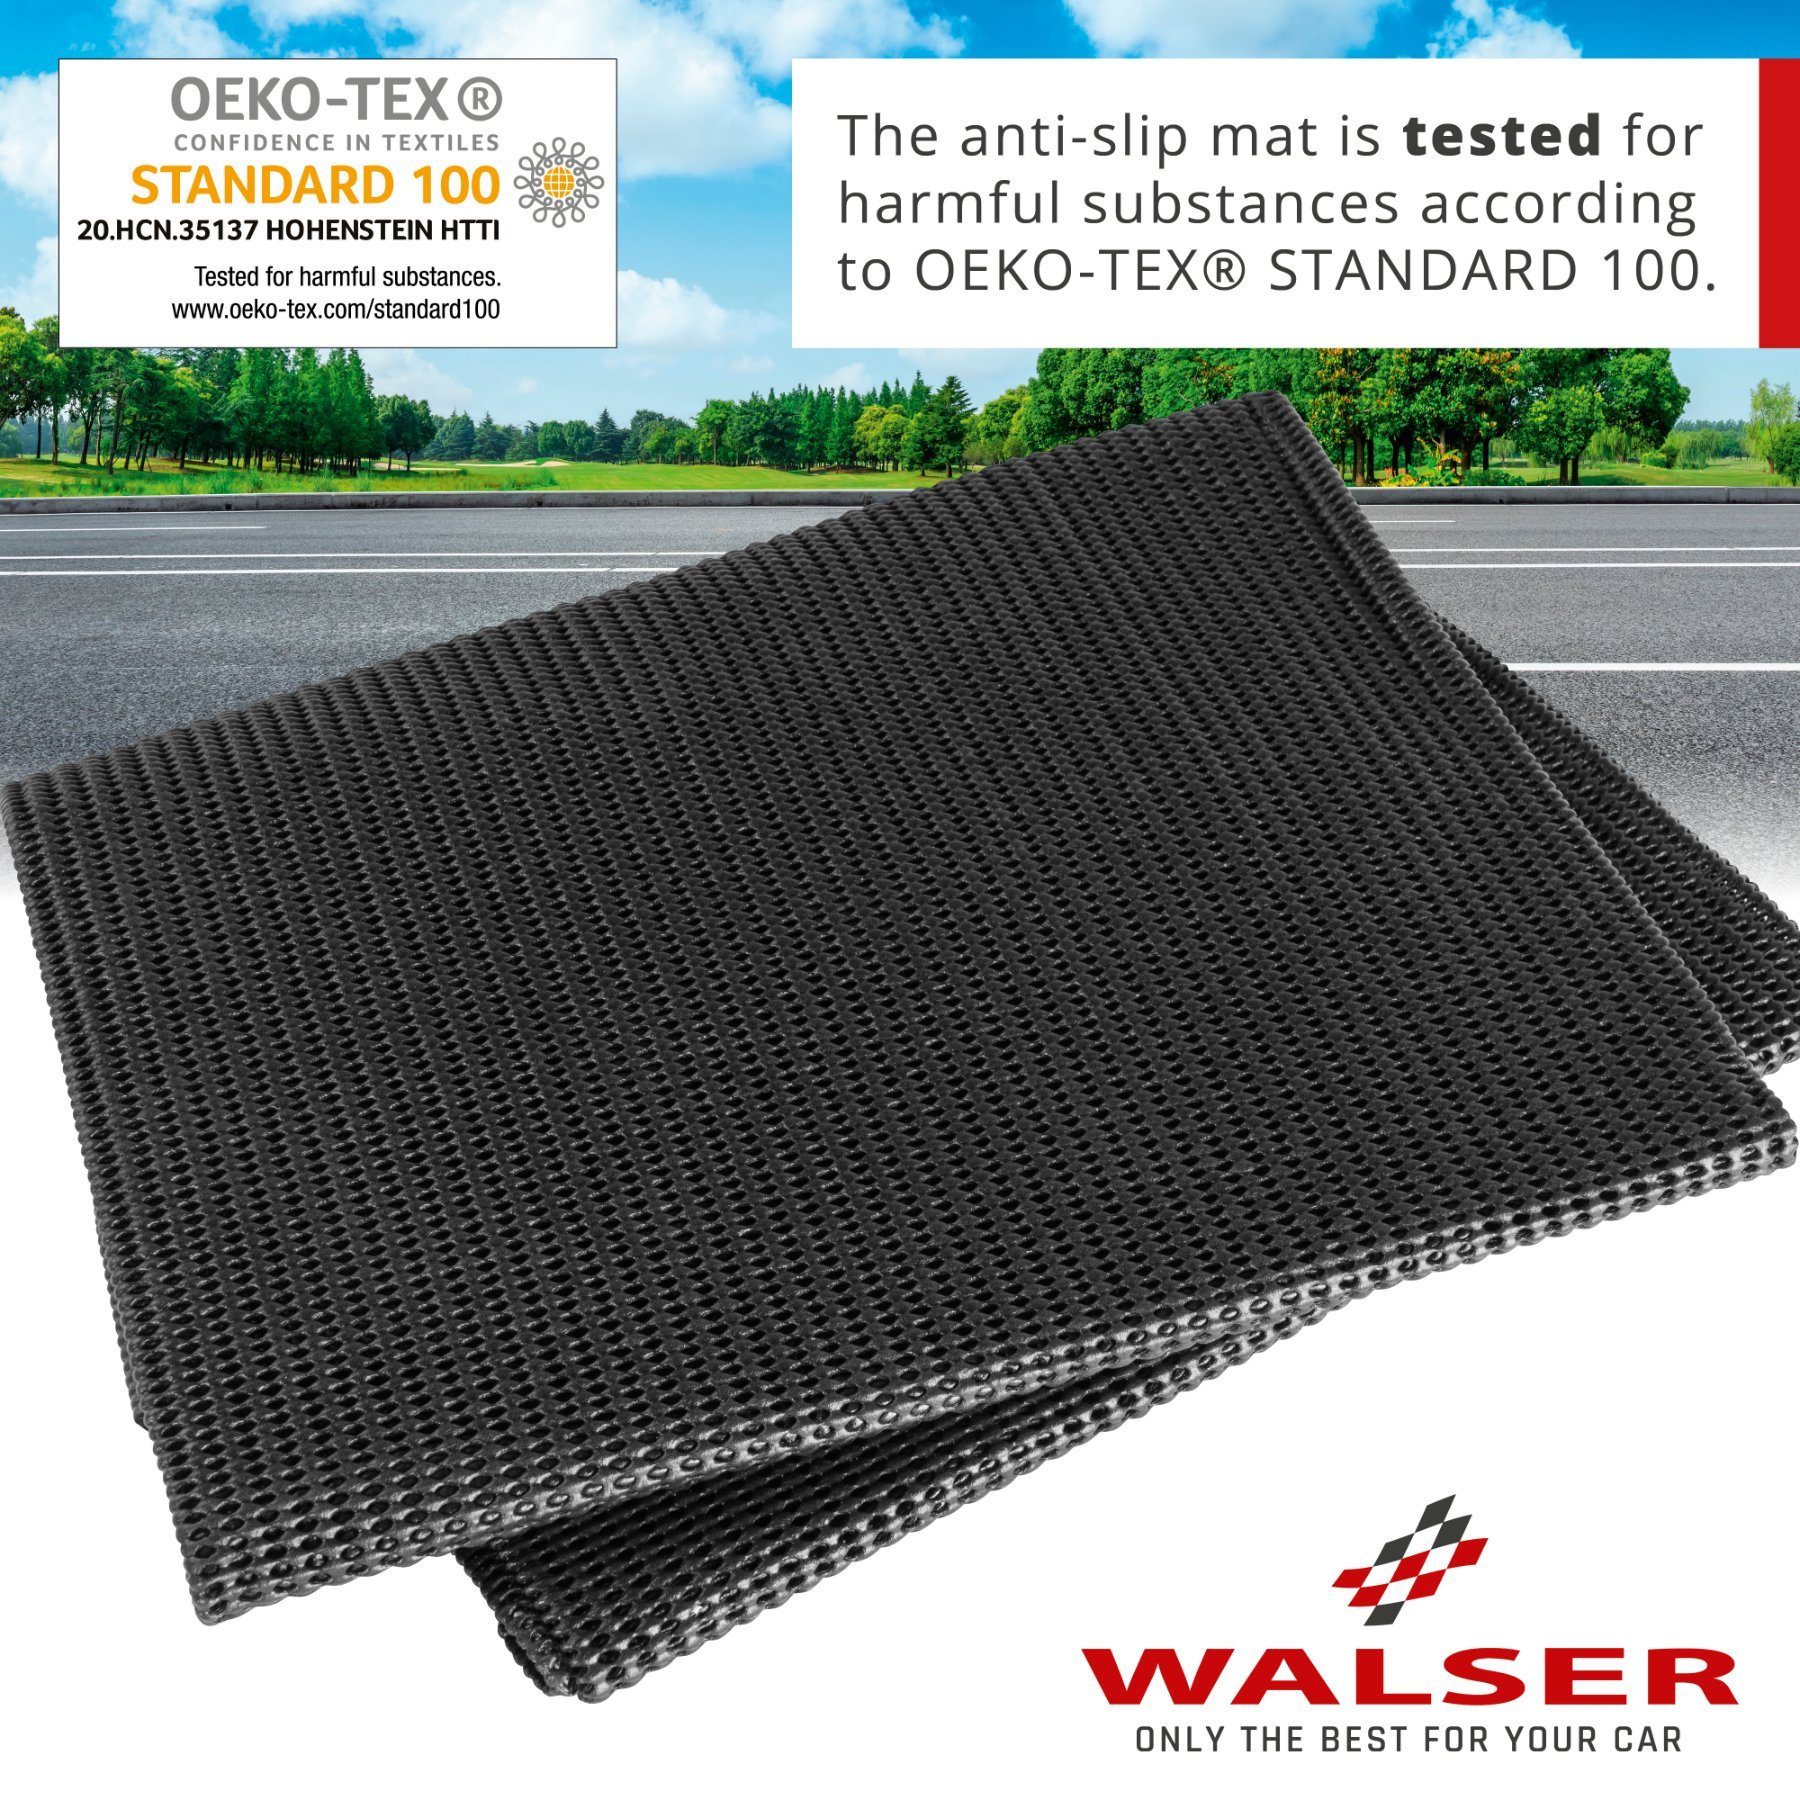 Anti-slip mat 120x90cm cut to size, OEKO-TEX Standard 100 tested